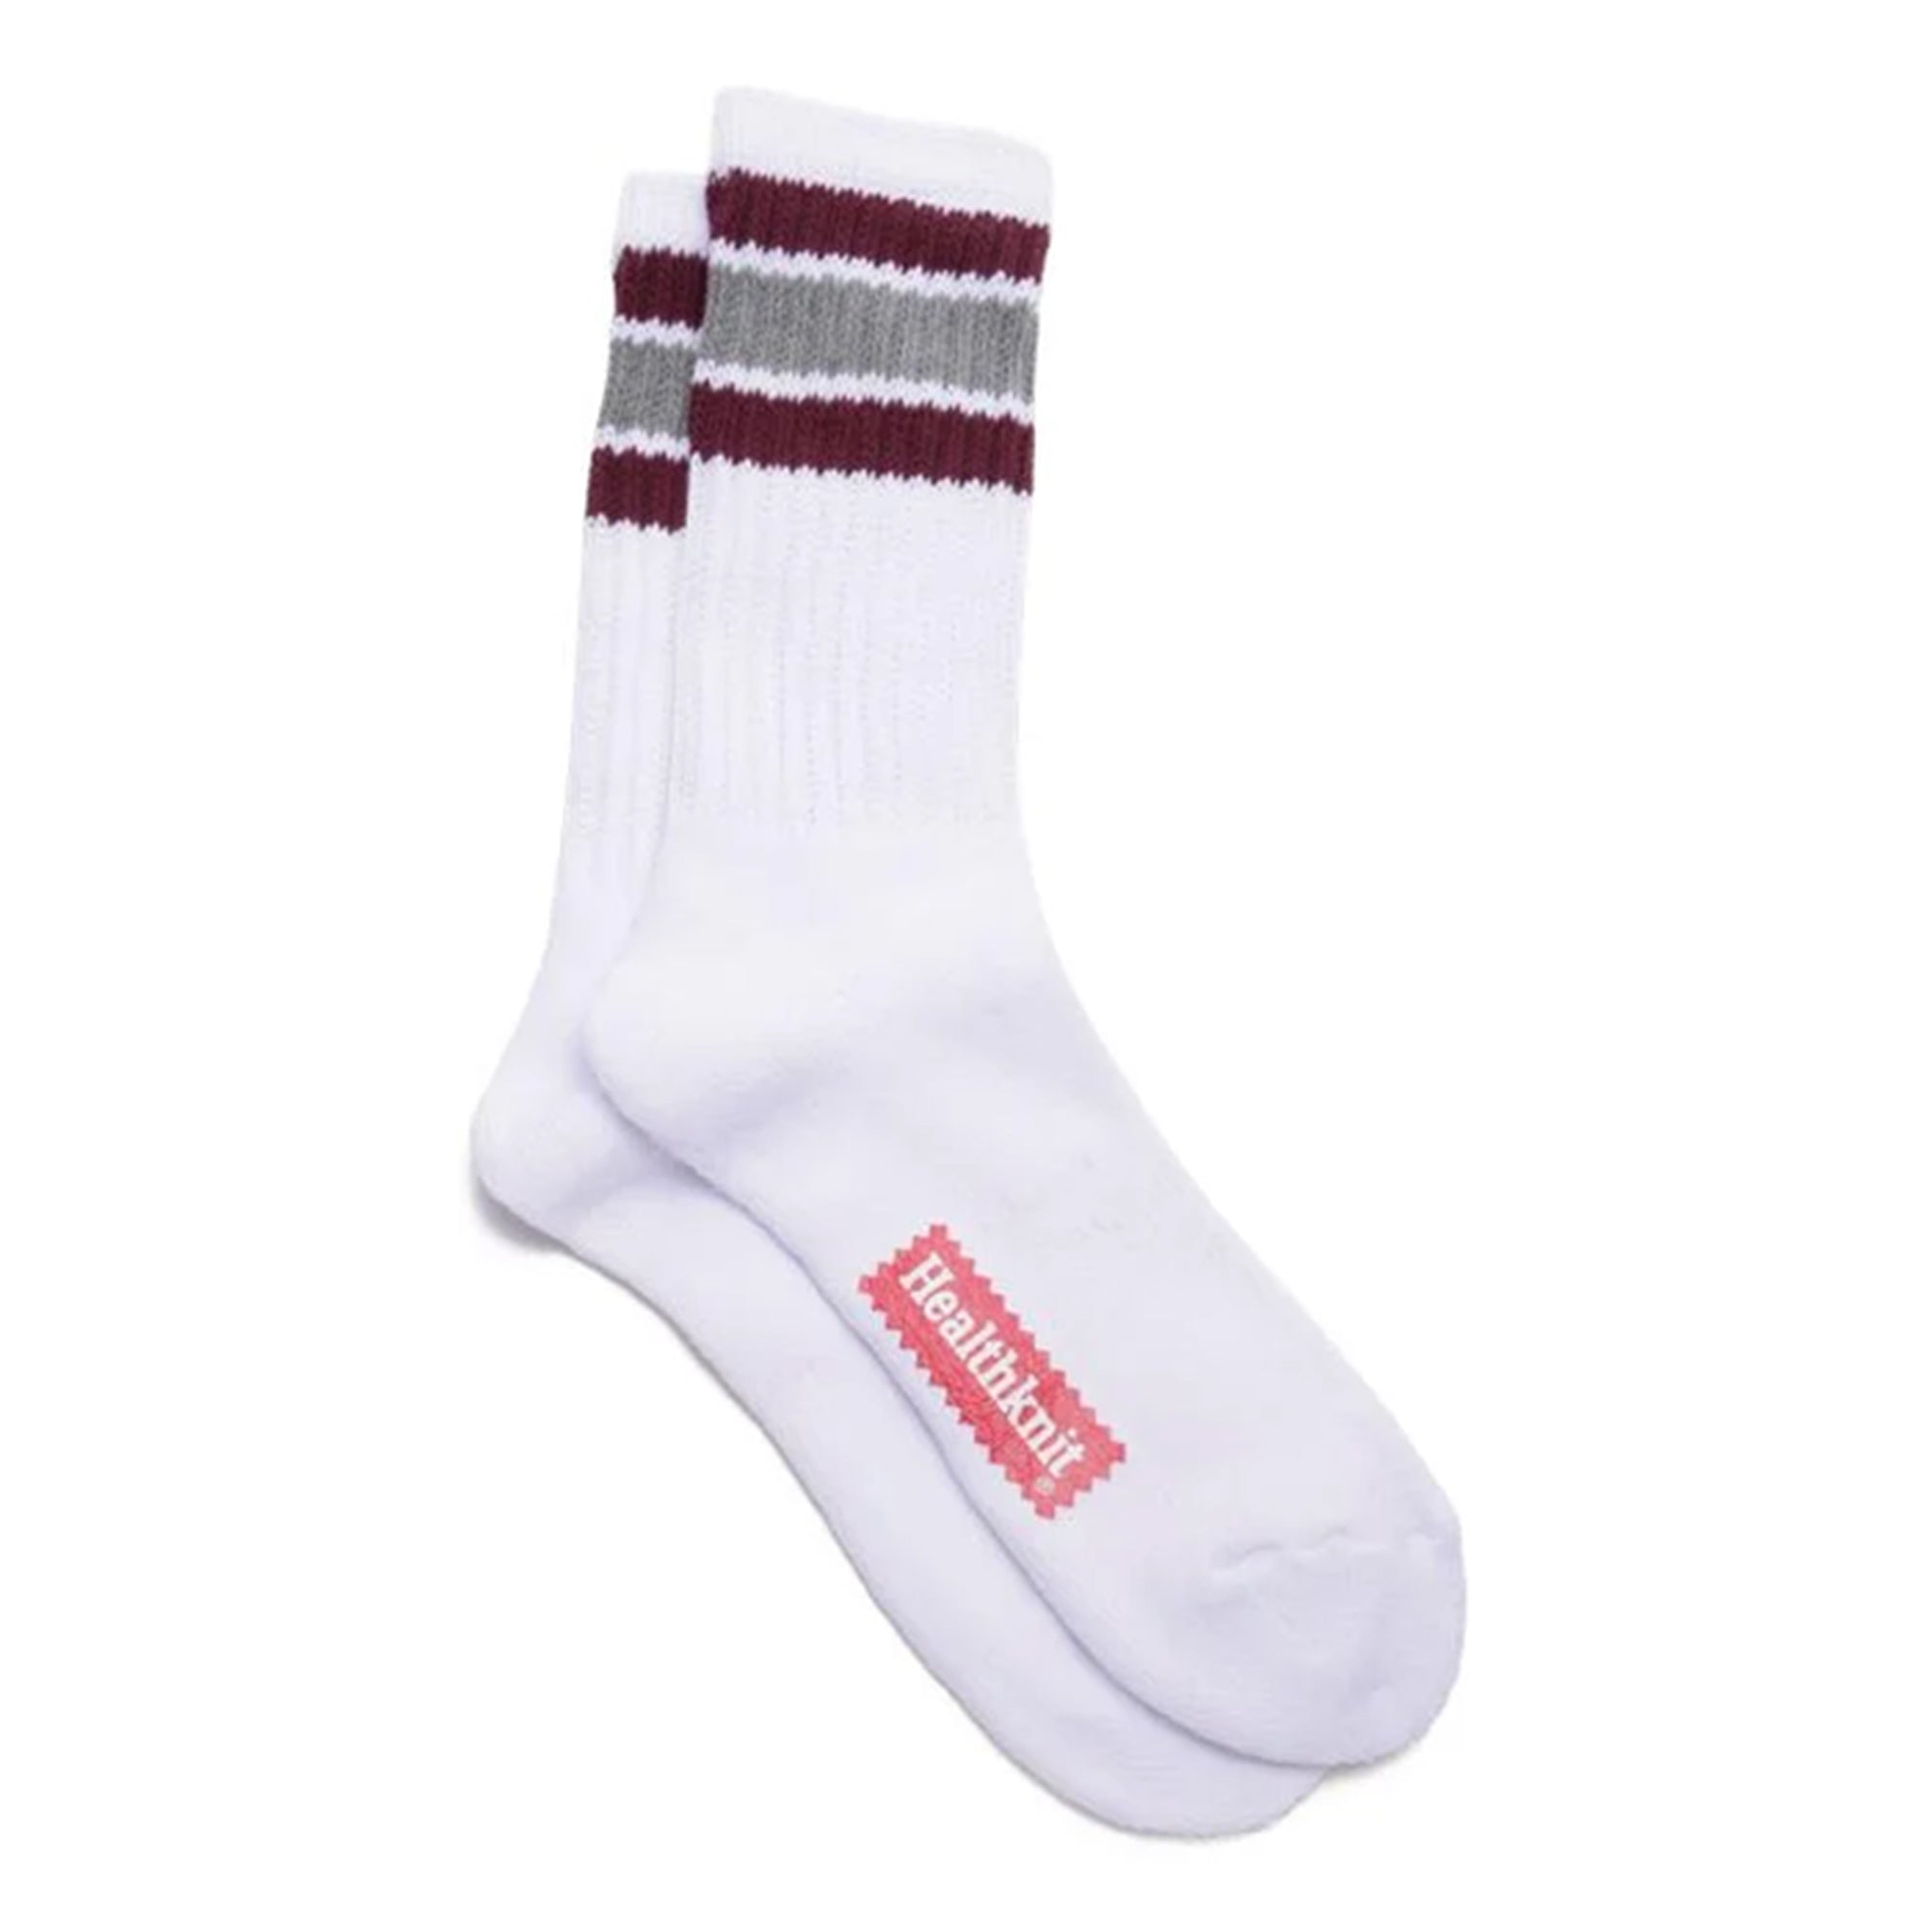 Healthknit Socks 3 Pack - White / Multi Stripe